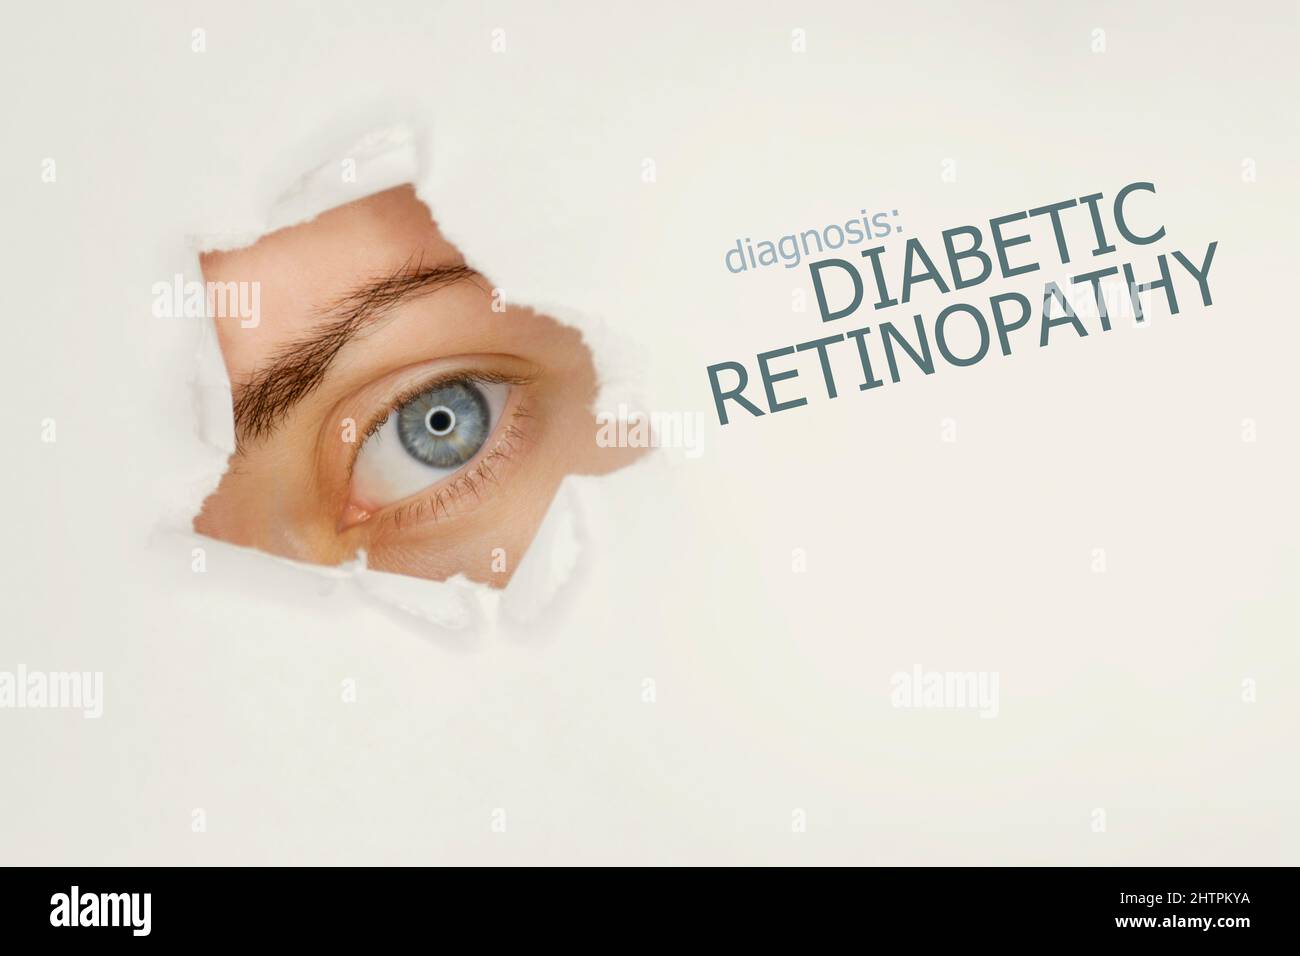 Diabetic retinopathy disease poster with eye test chart and blue eye.Studio grey background Stock Photo